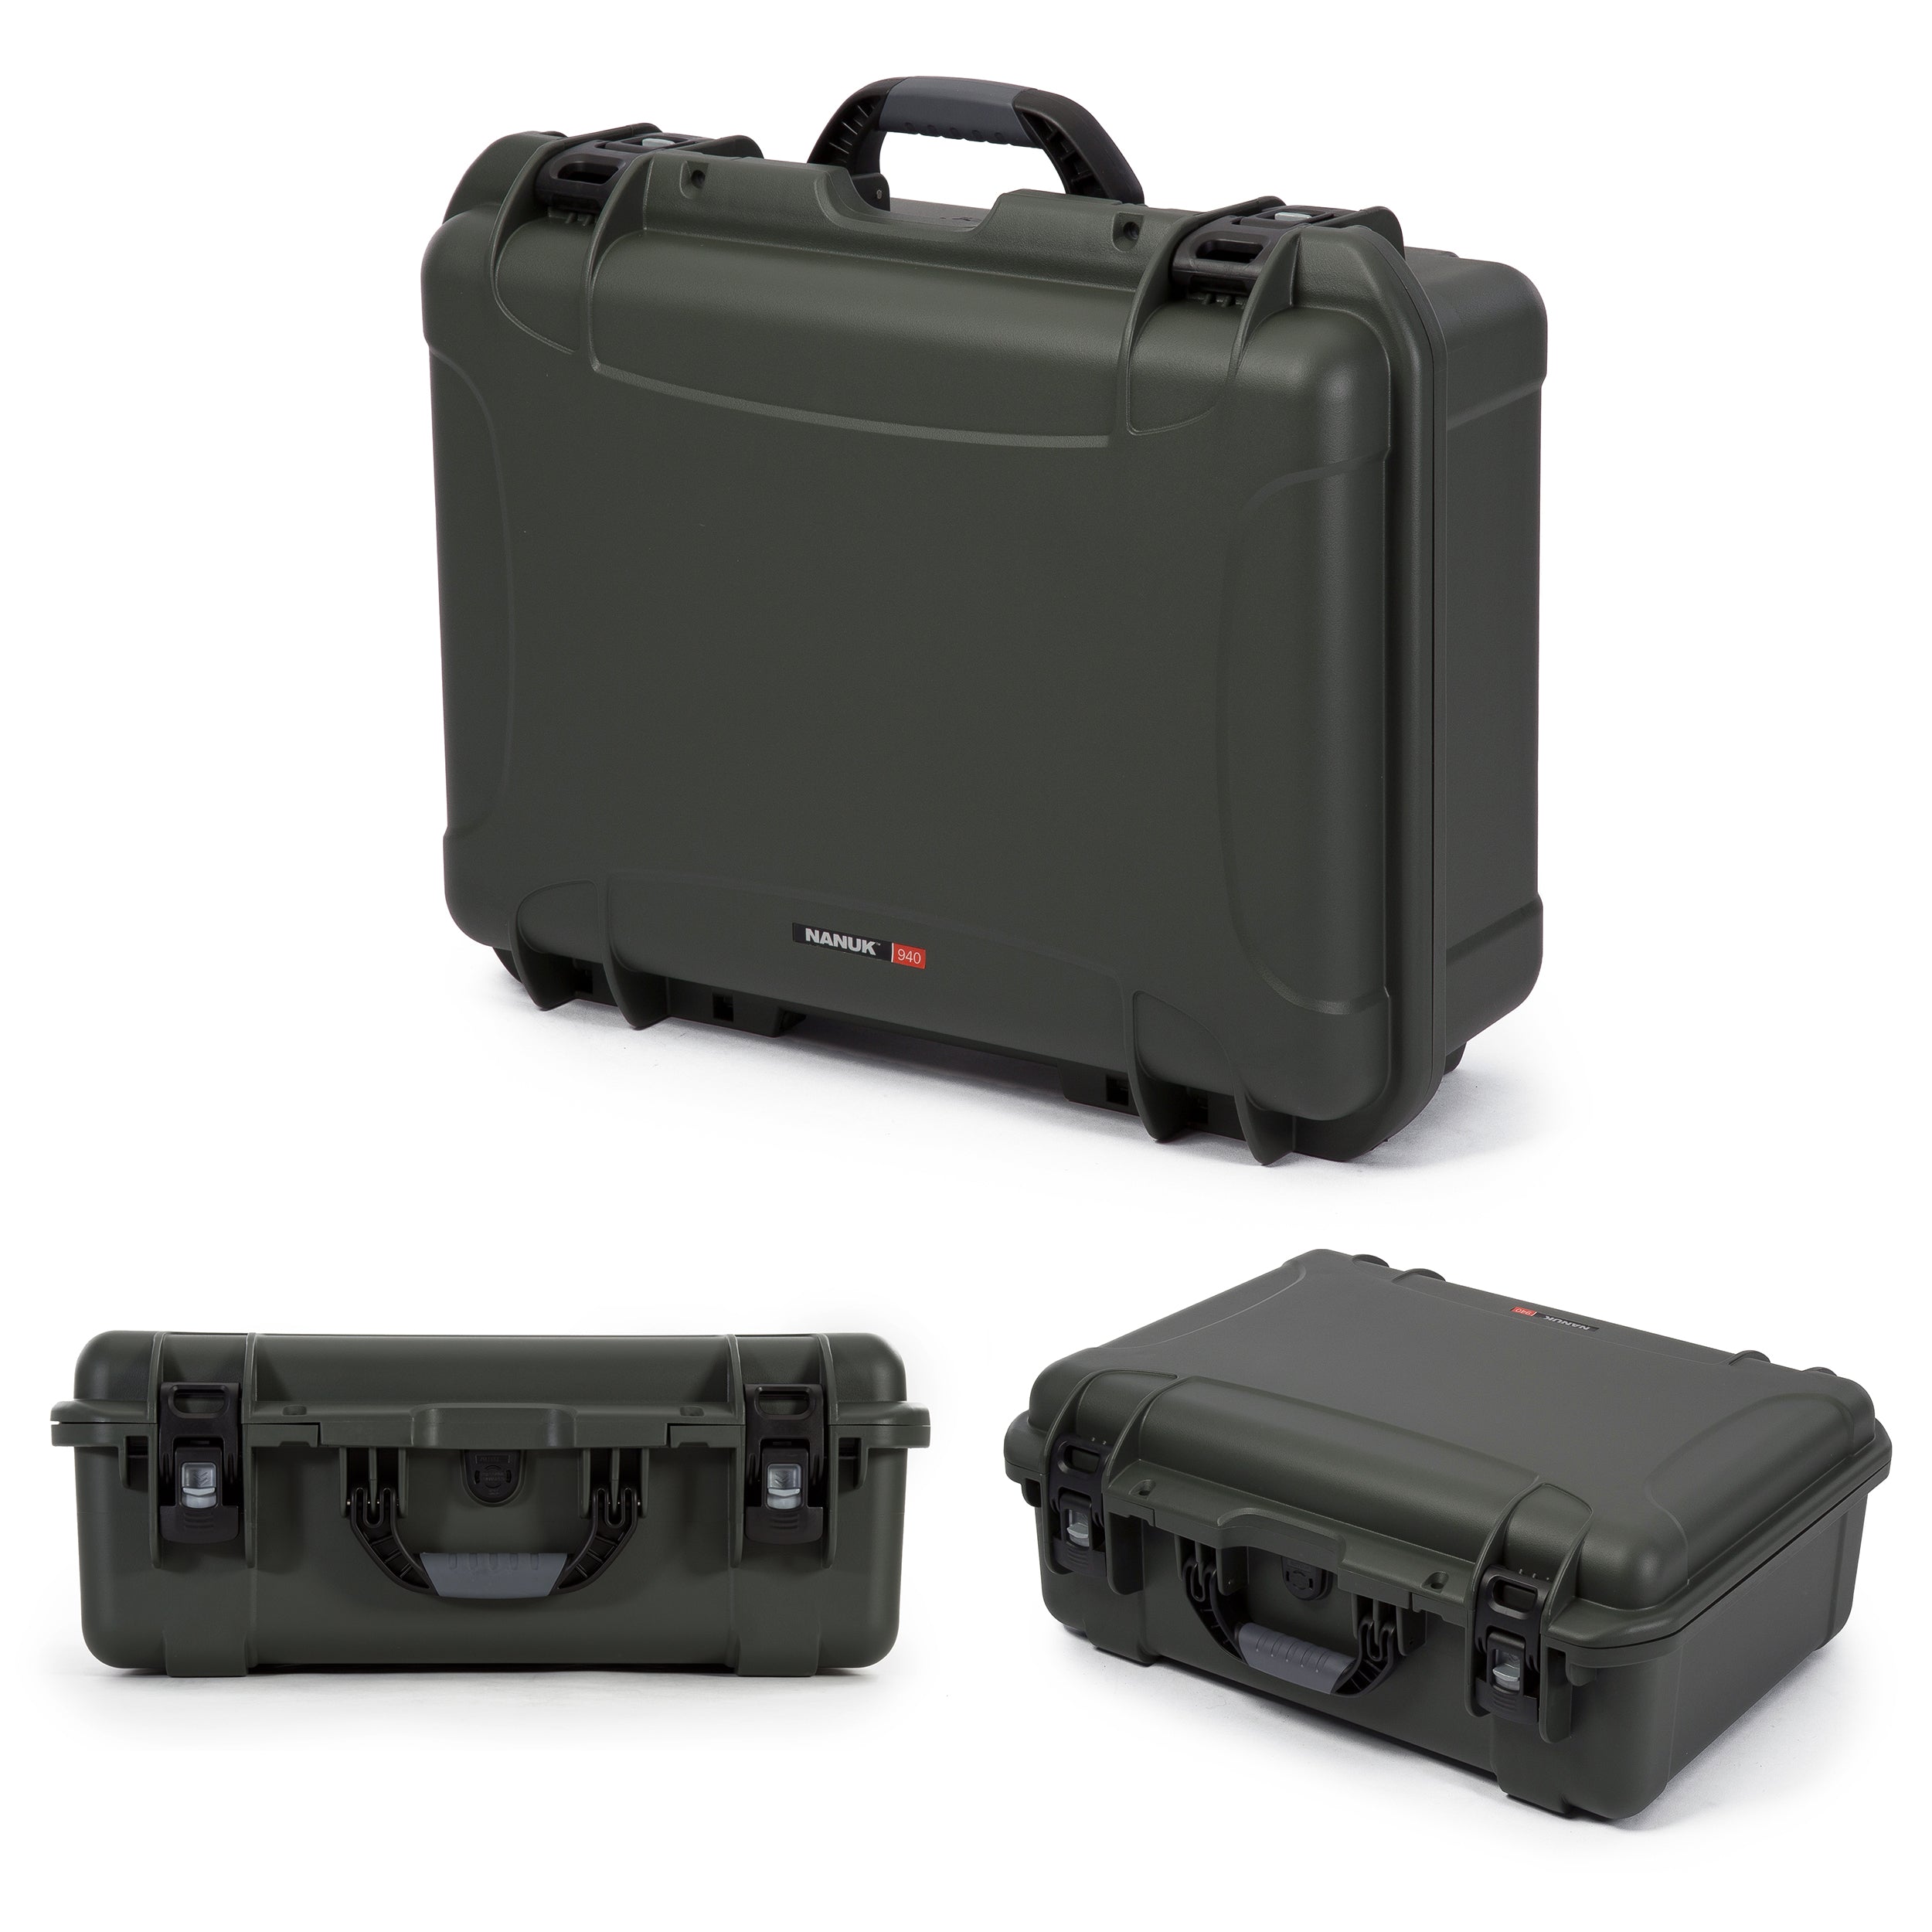 Nanuk 940 Ronin M Waterproof Hard Case with Custom Foam Insert for DJI Ronin M Gimbal Stabilizer System - Olive